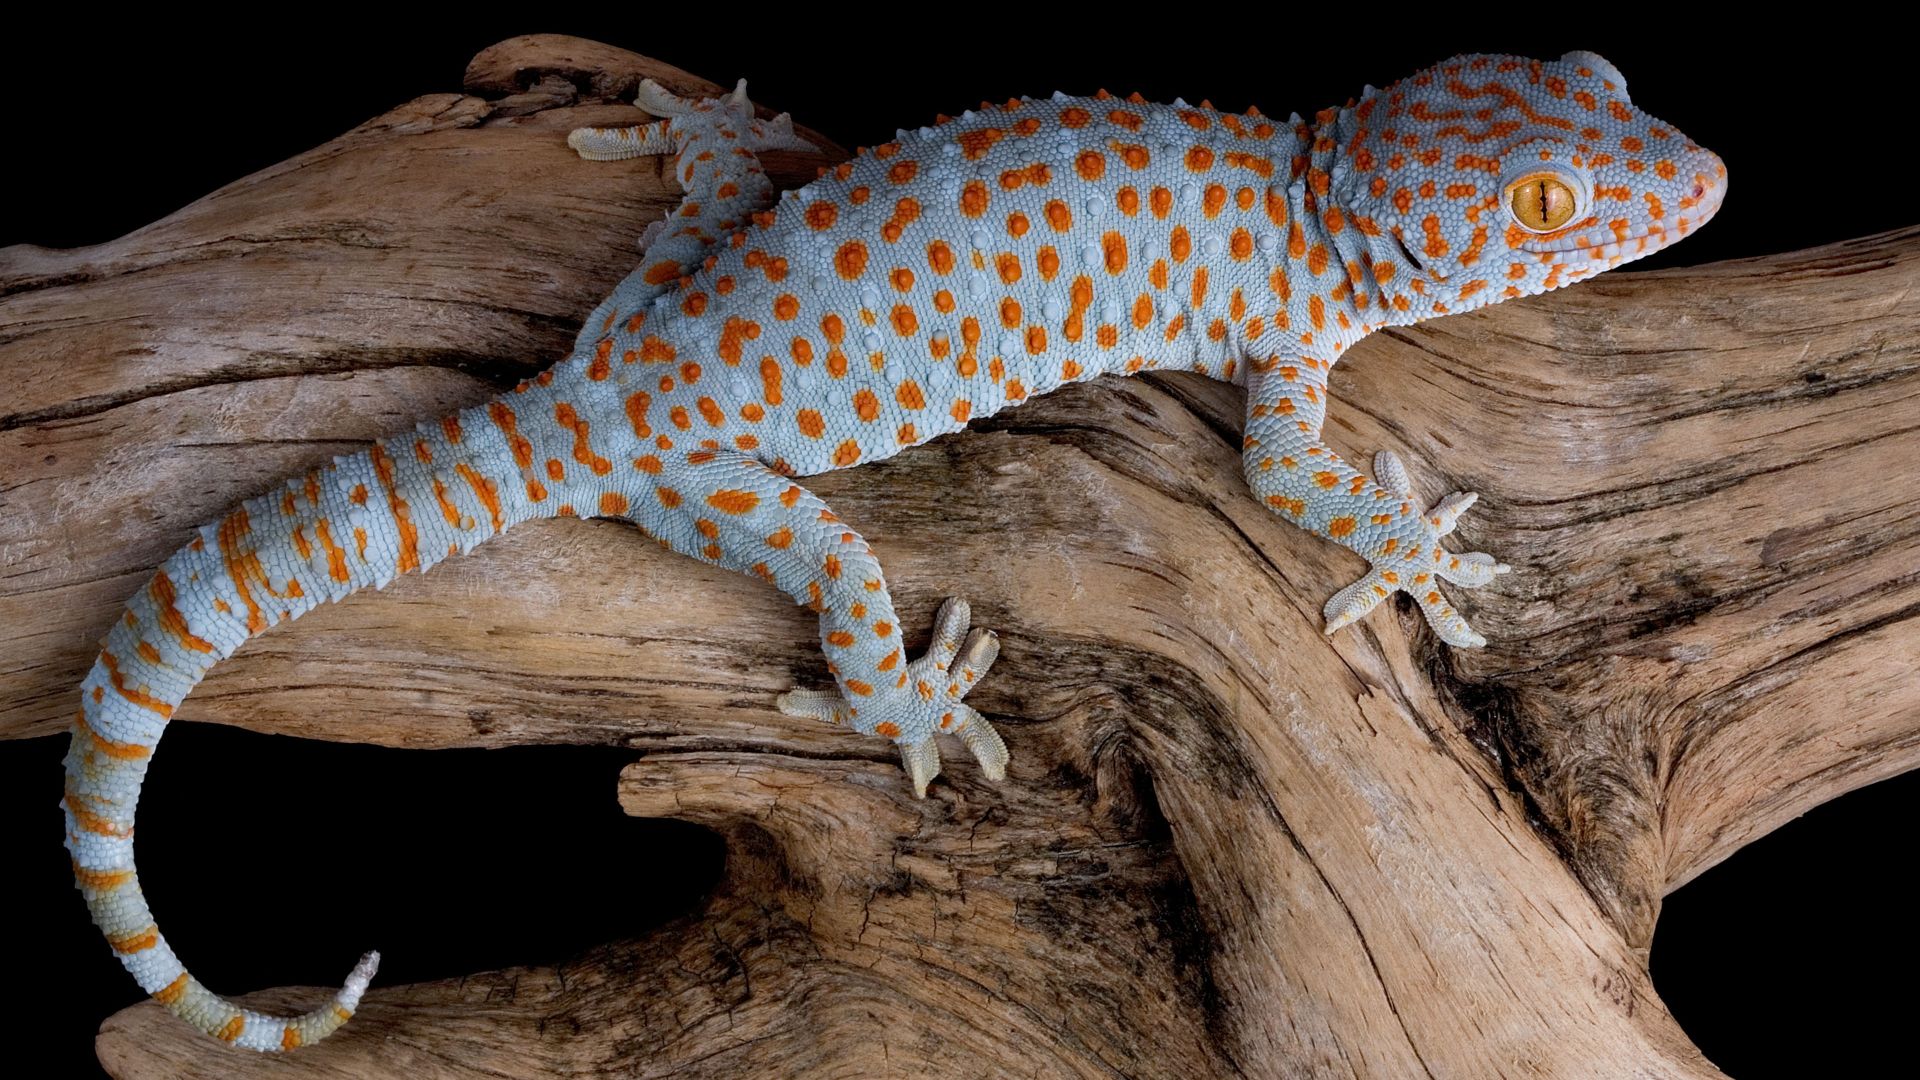 Геккон, ящерица, рептилия, Gecko, reptile, lizard (horizontal)